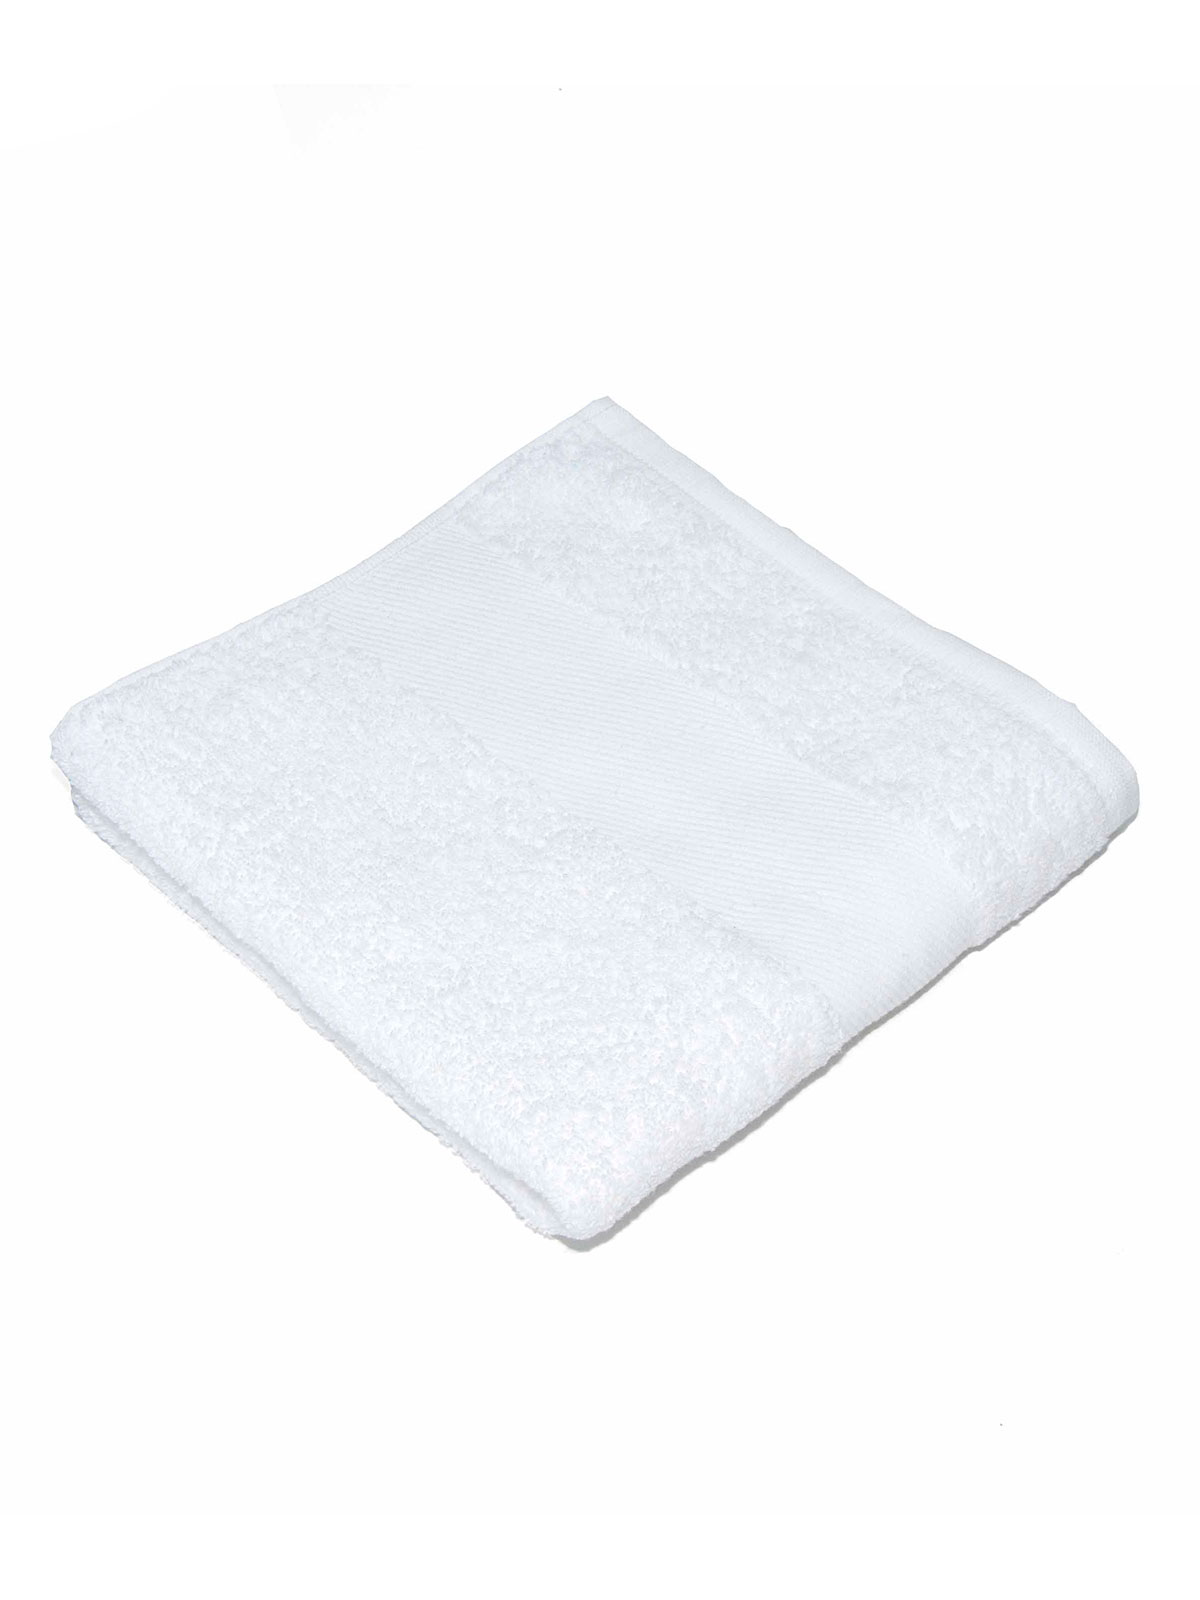 classic-towel-50x100-white.webp